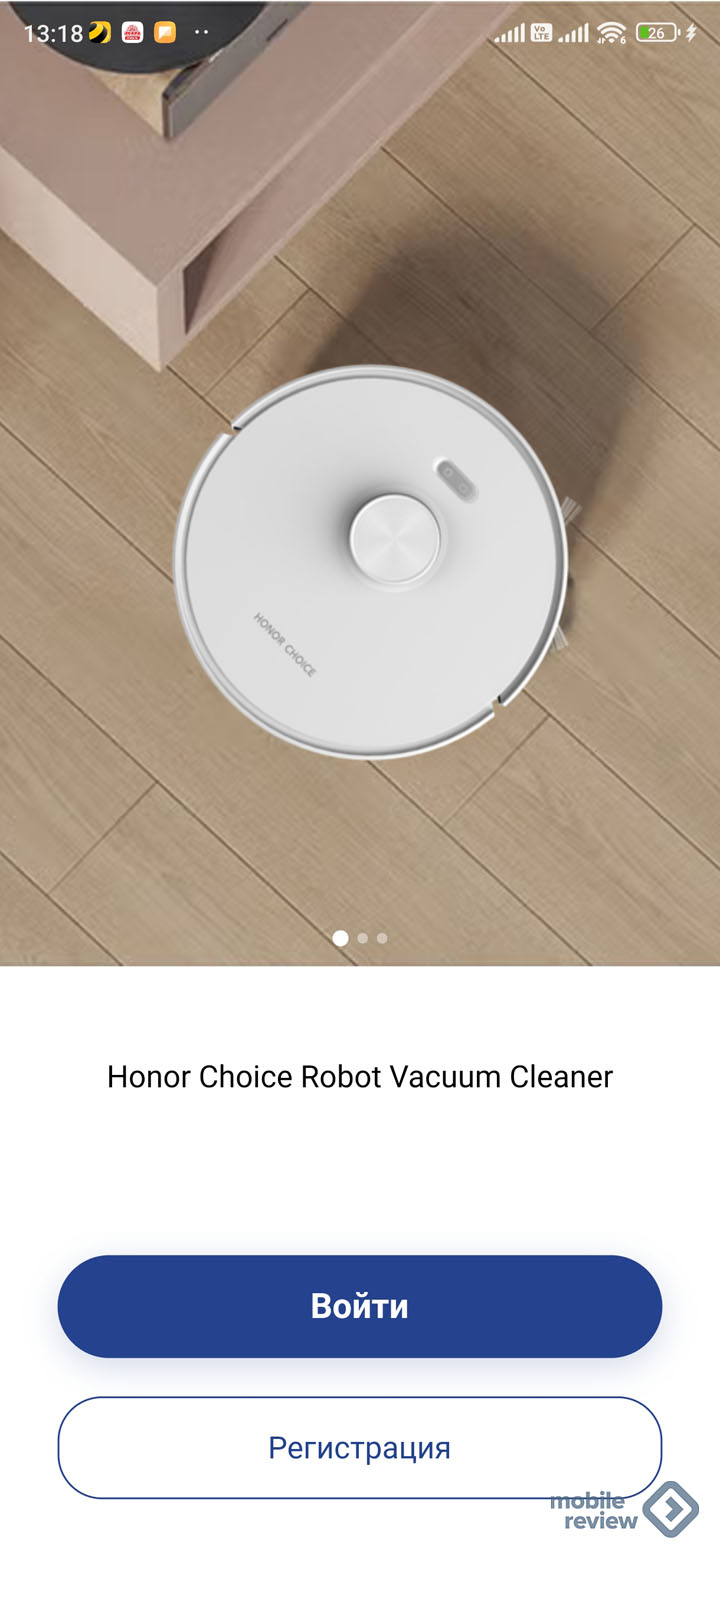 Honor choice r2 plus rob 01. Робот пылесос хонор. Honor choice Cleaner r2 запчасти. Зарядная станция Honor Robot Cleaner r2. Как подключить робот пылесос Honor r2.